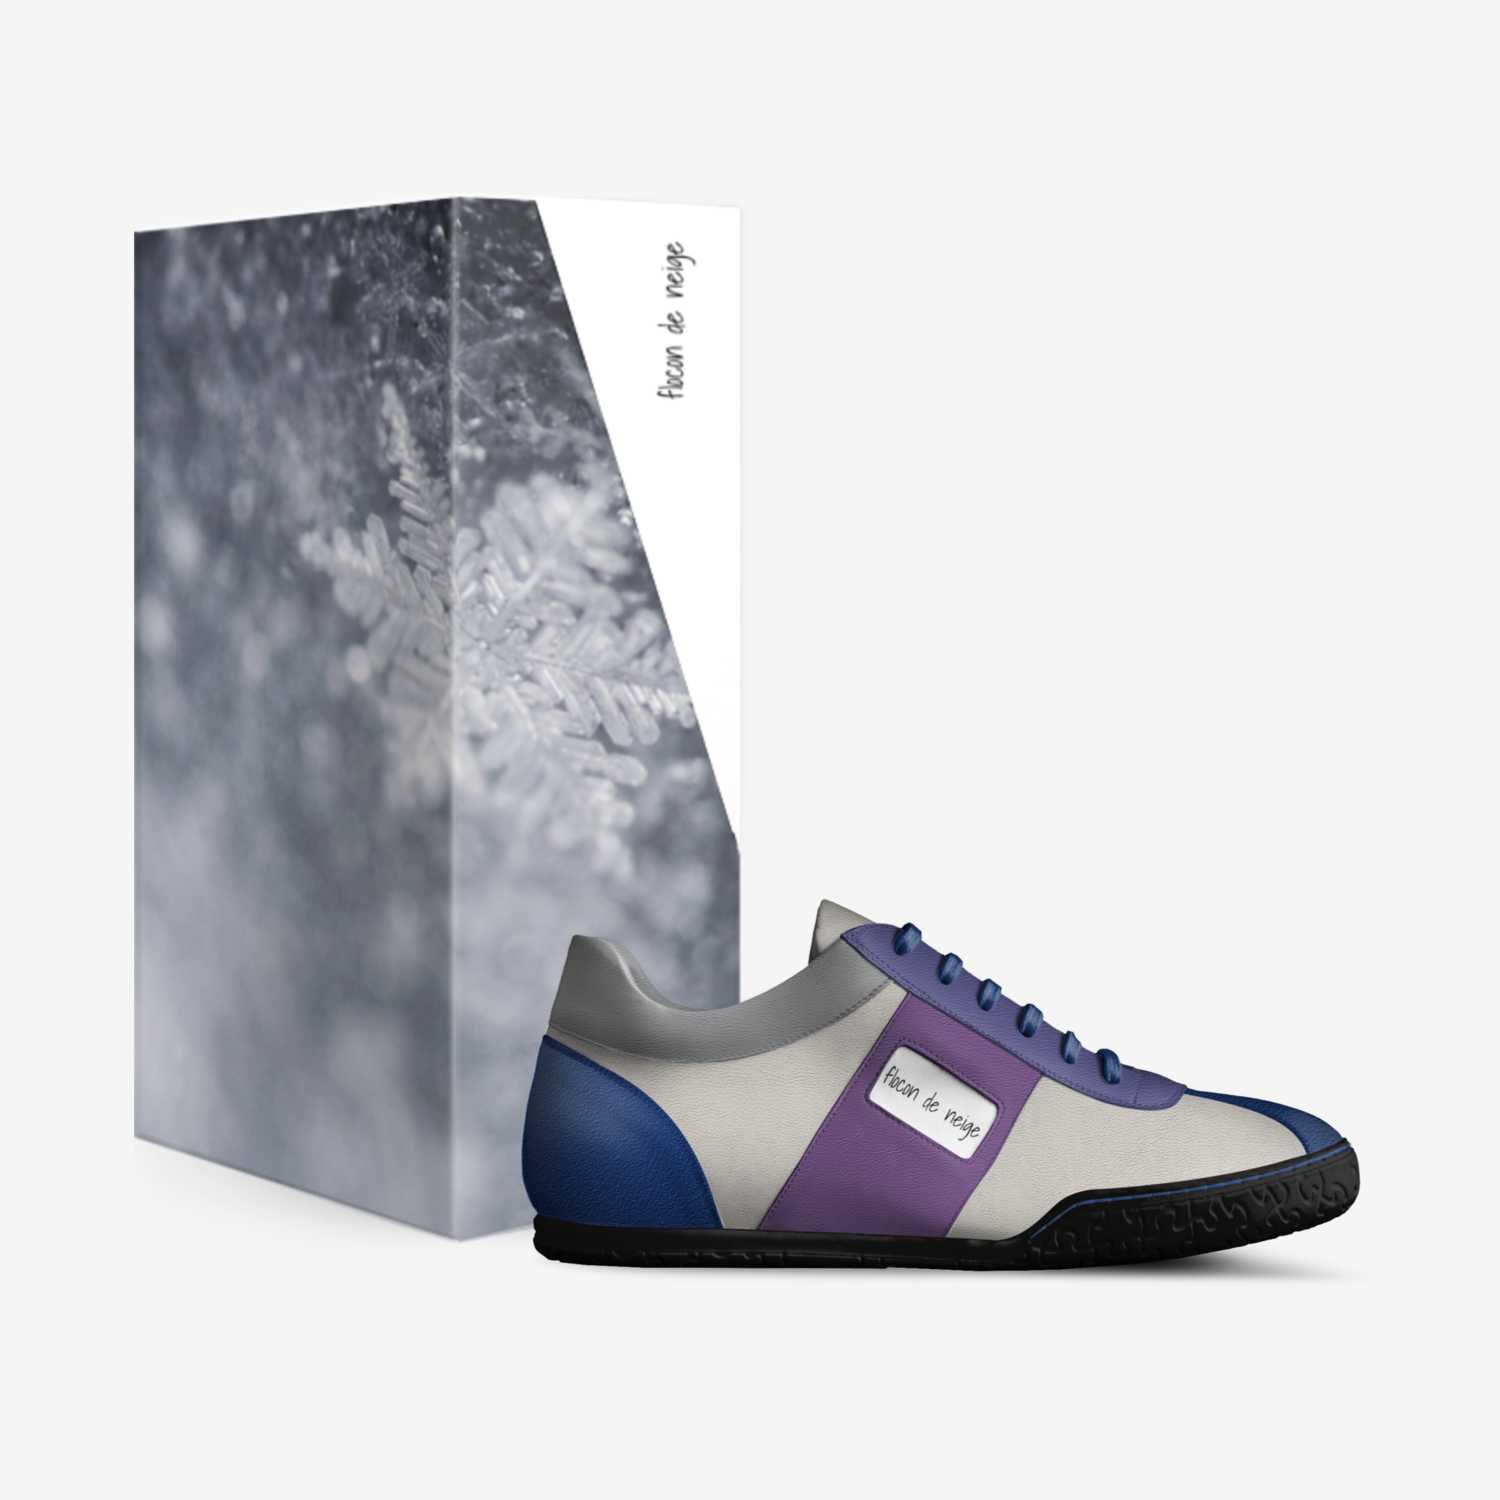 flocon de neige custom made in Italy shoes by Yasuhiko Hoshi | Box view